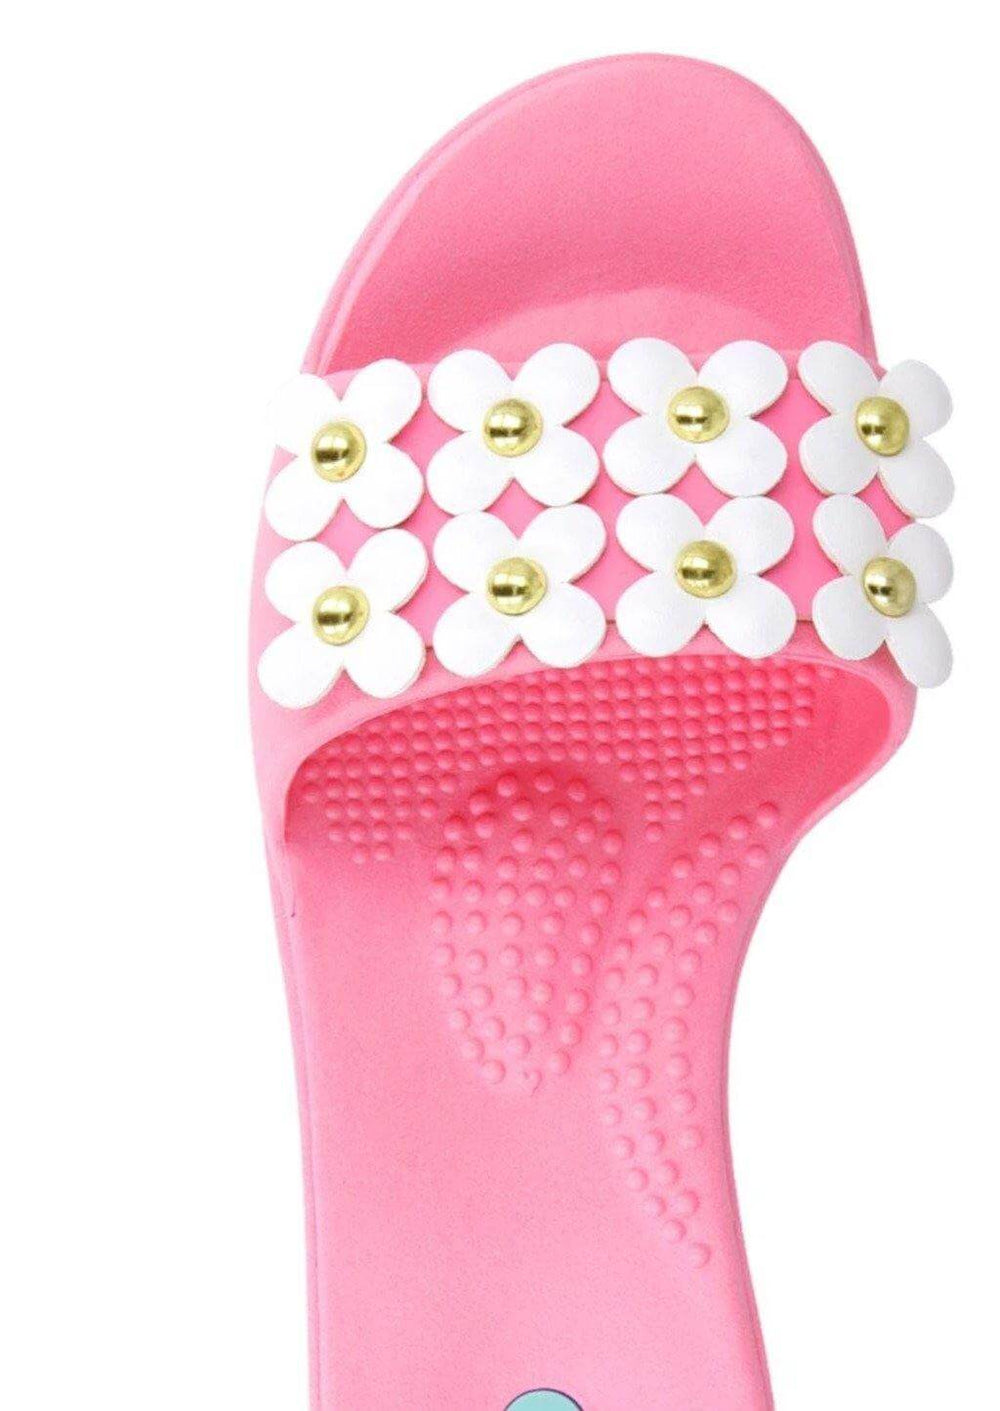 Brand: Oka-B - Oka-B Sedona Flower Detail Pink Sandal Slides -  Beach Wear, Featured, Flip Flops, Flower, Made in America, made in usa, pink, Sandals, Sedona, Shoes made local, Slides, Spring, Summer, Women - Classy Cozy Cool Boutique